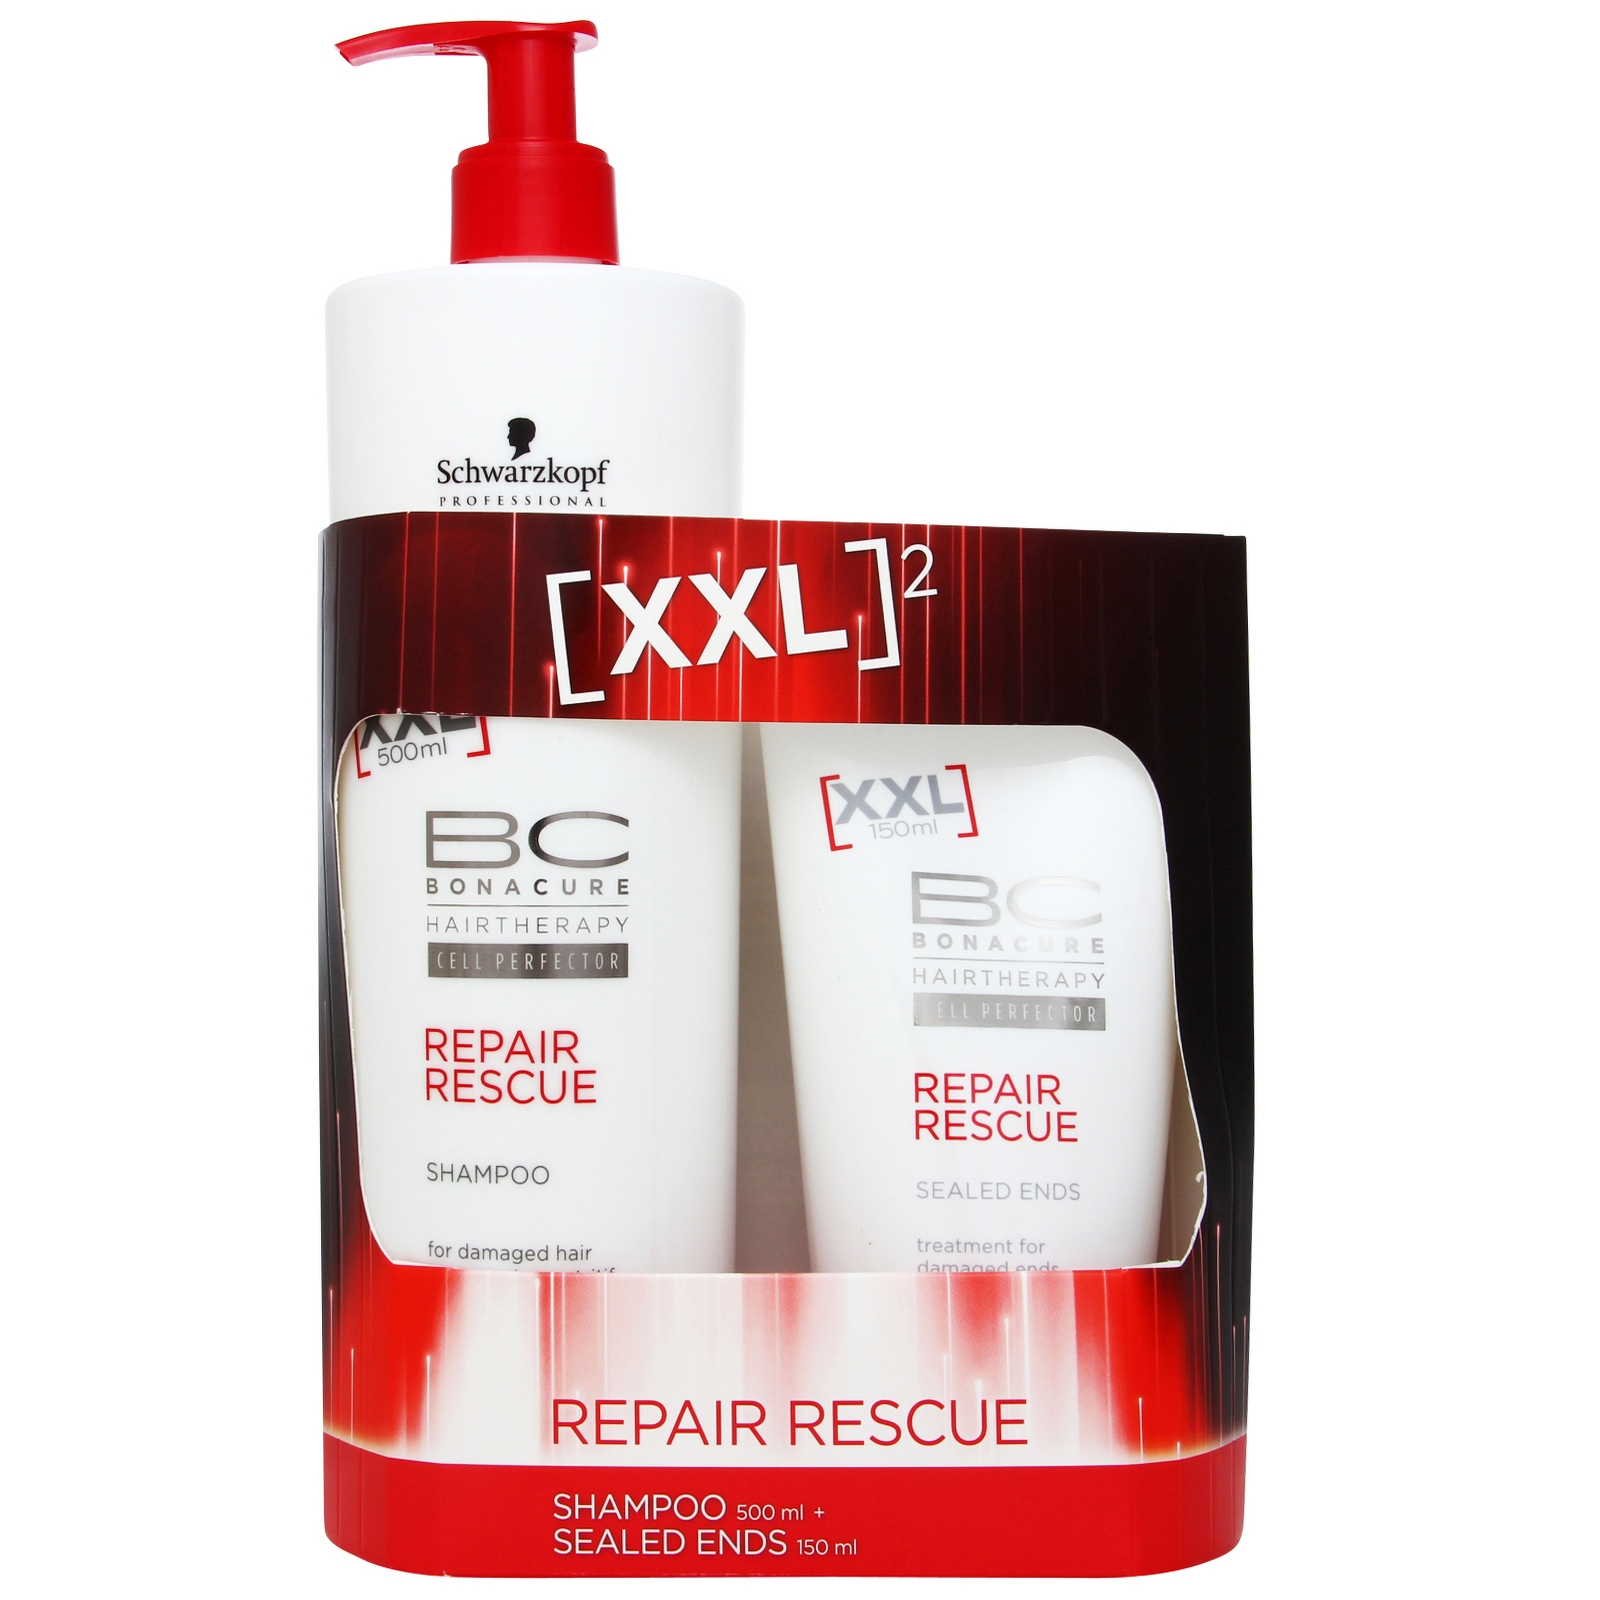 Schwarzkopf Bona Cure Repair Rescue XXL Duo Shampoo + Seal Ends